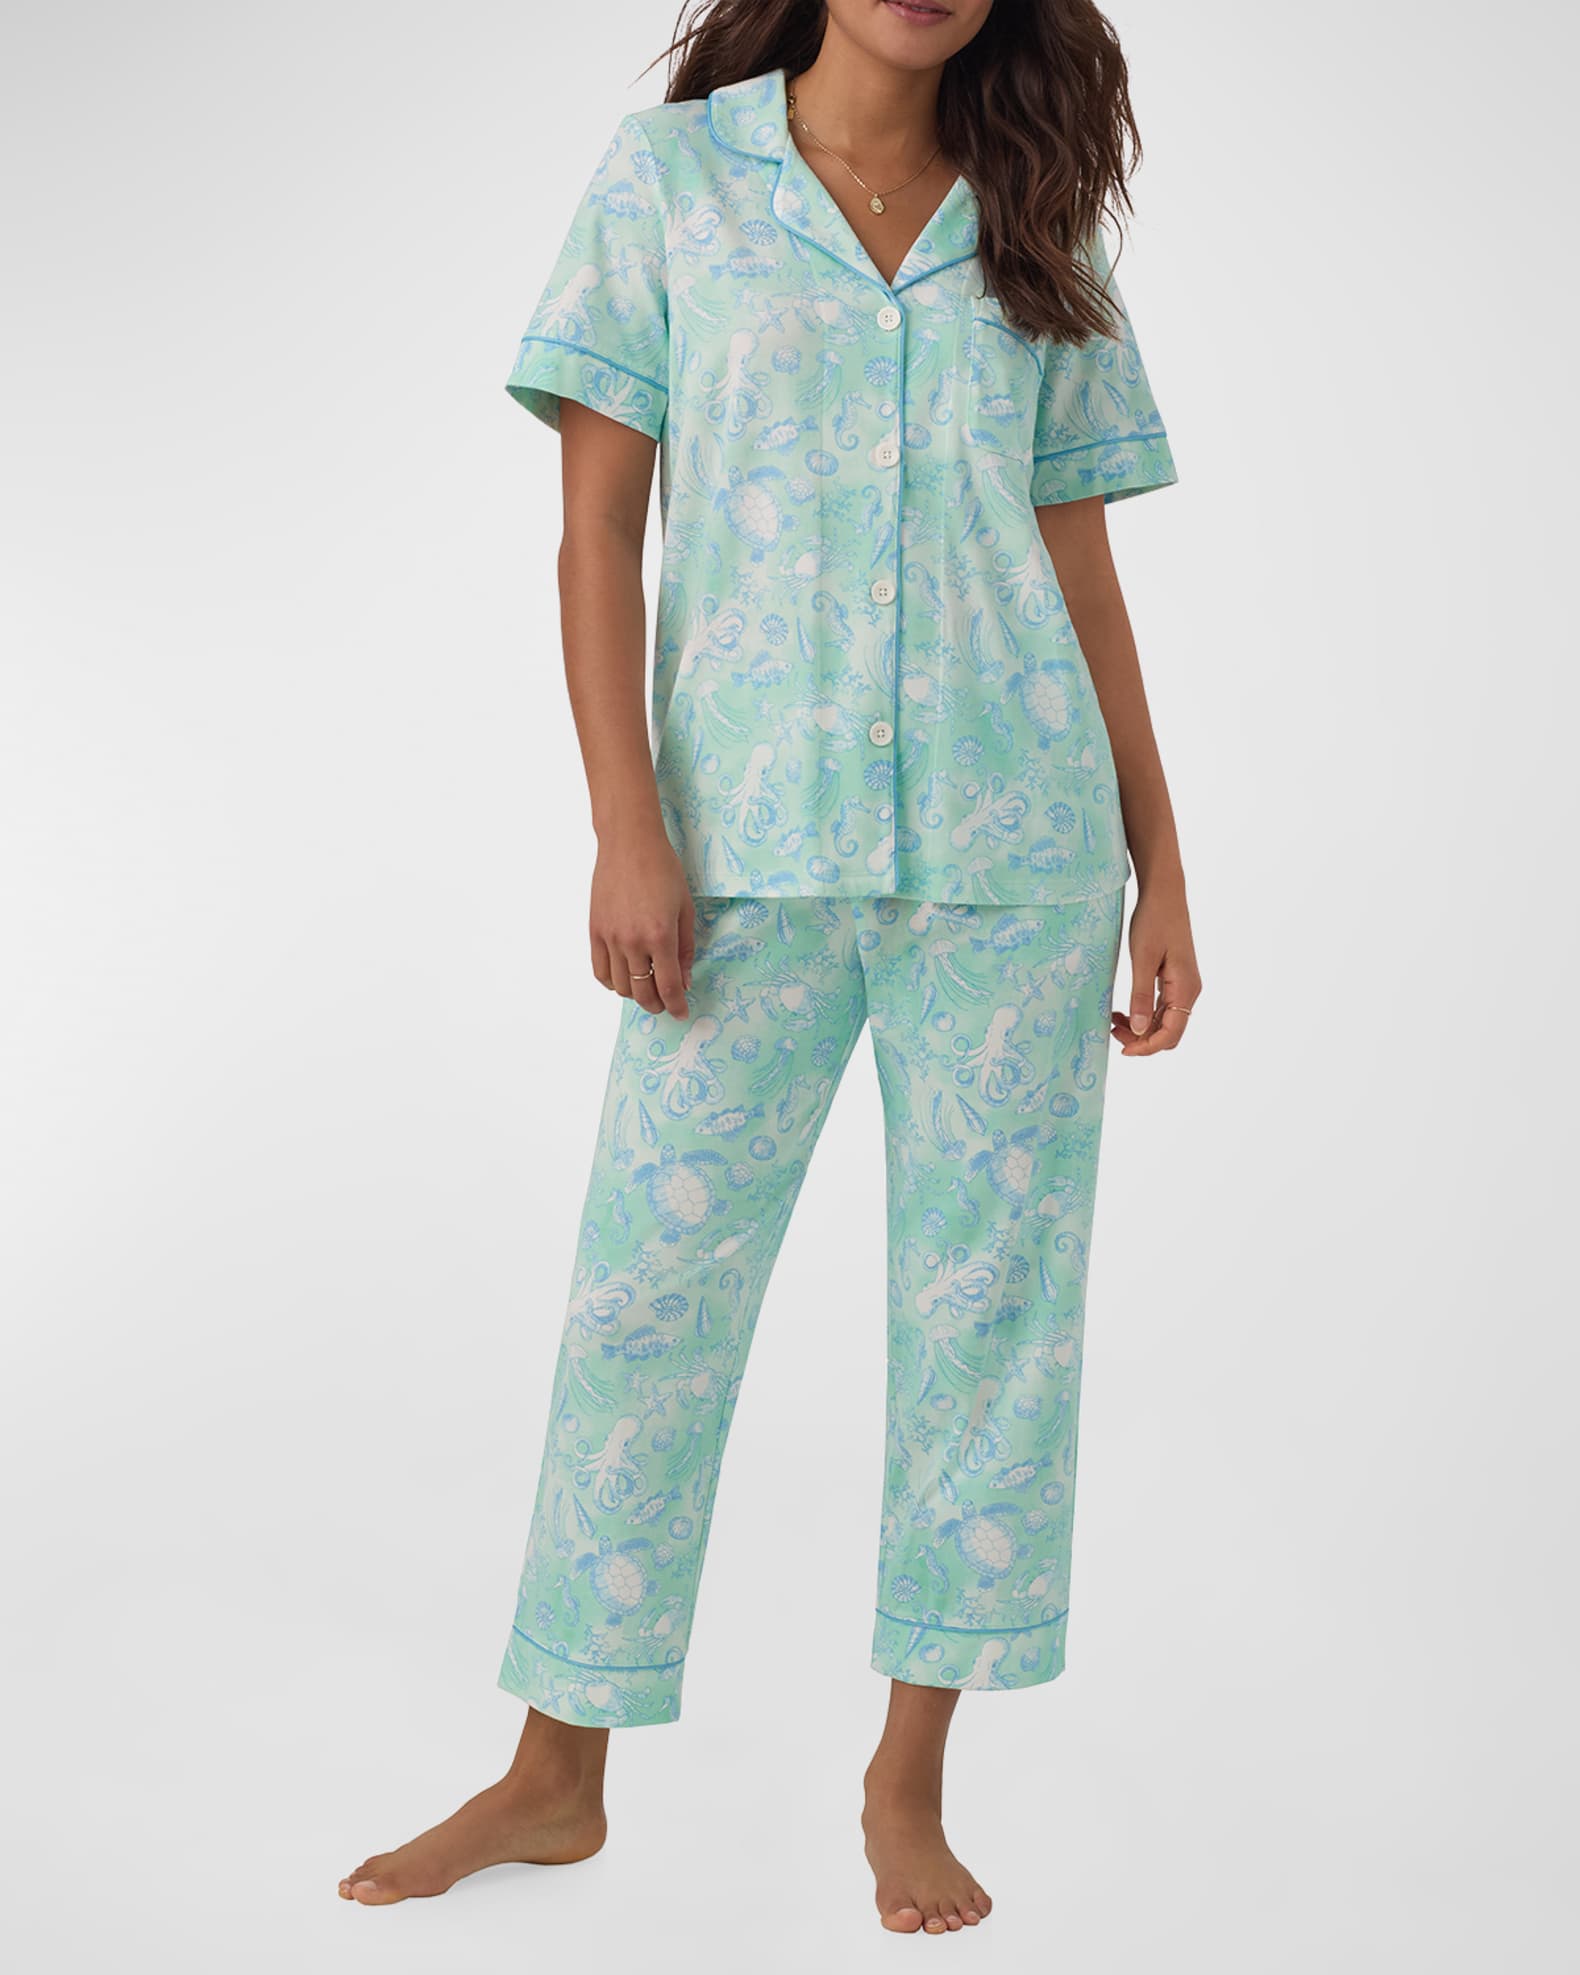 Bedhead Pajamas Short Sleeve Cropped Pajama Set Acquatic Life